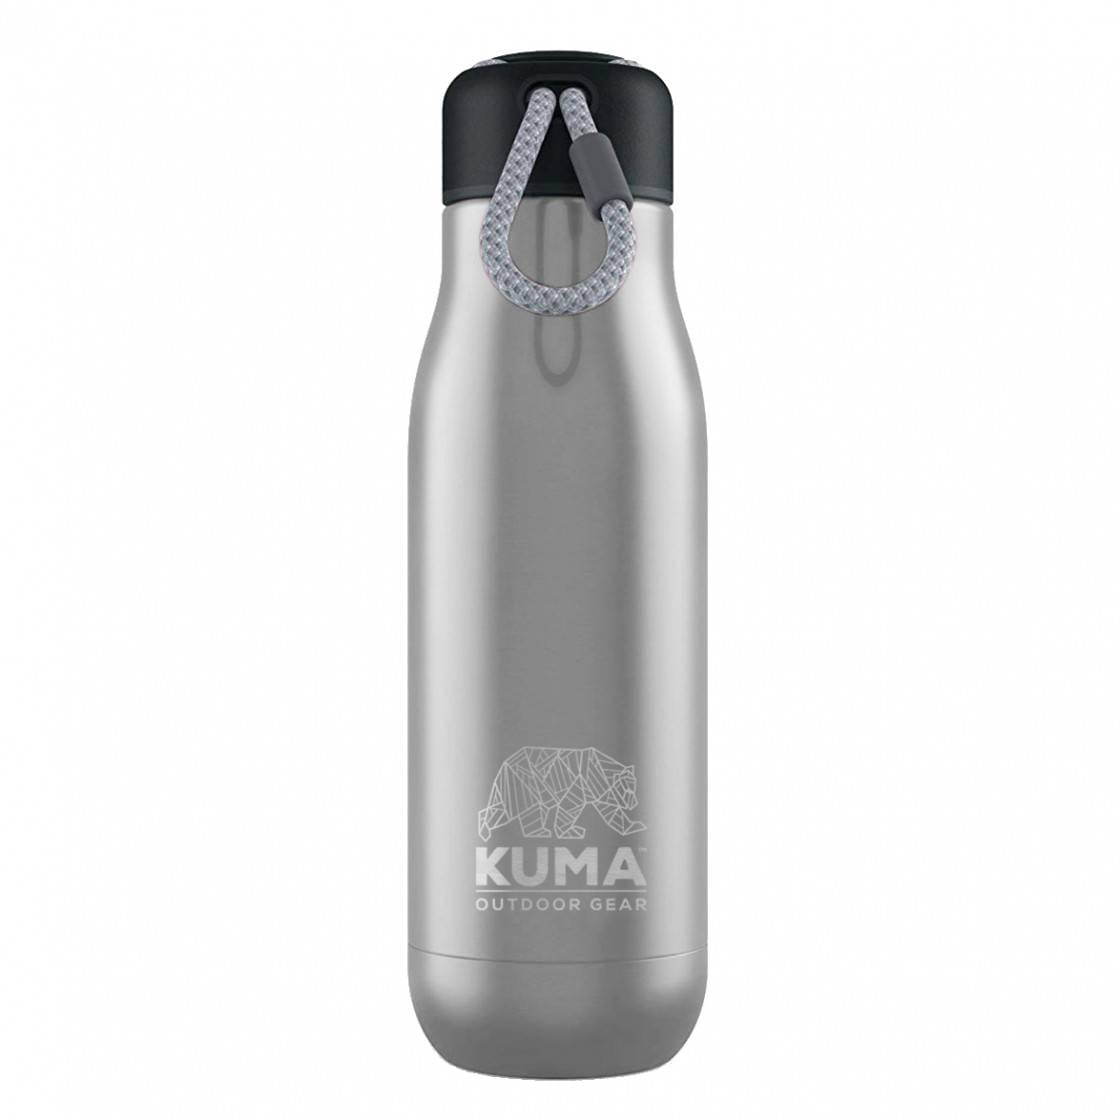 Kuma Outdoor Gear Qualifies for Free Shipping Kuma Outdoor Gear Rope Water Bottle 17 oz White #KM-RWB-WH